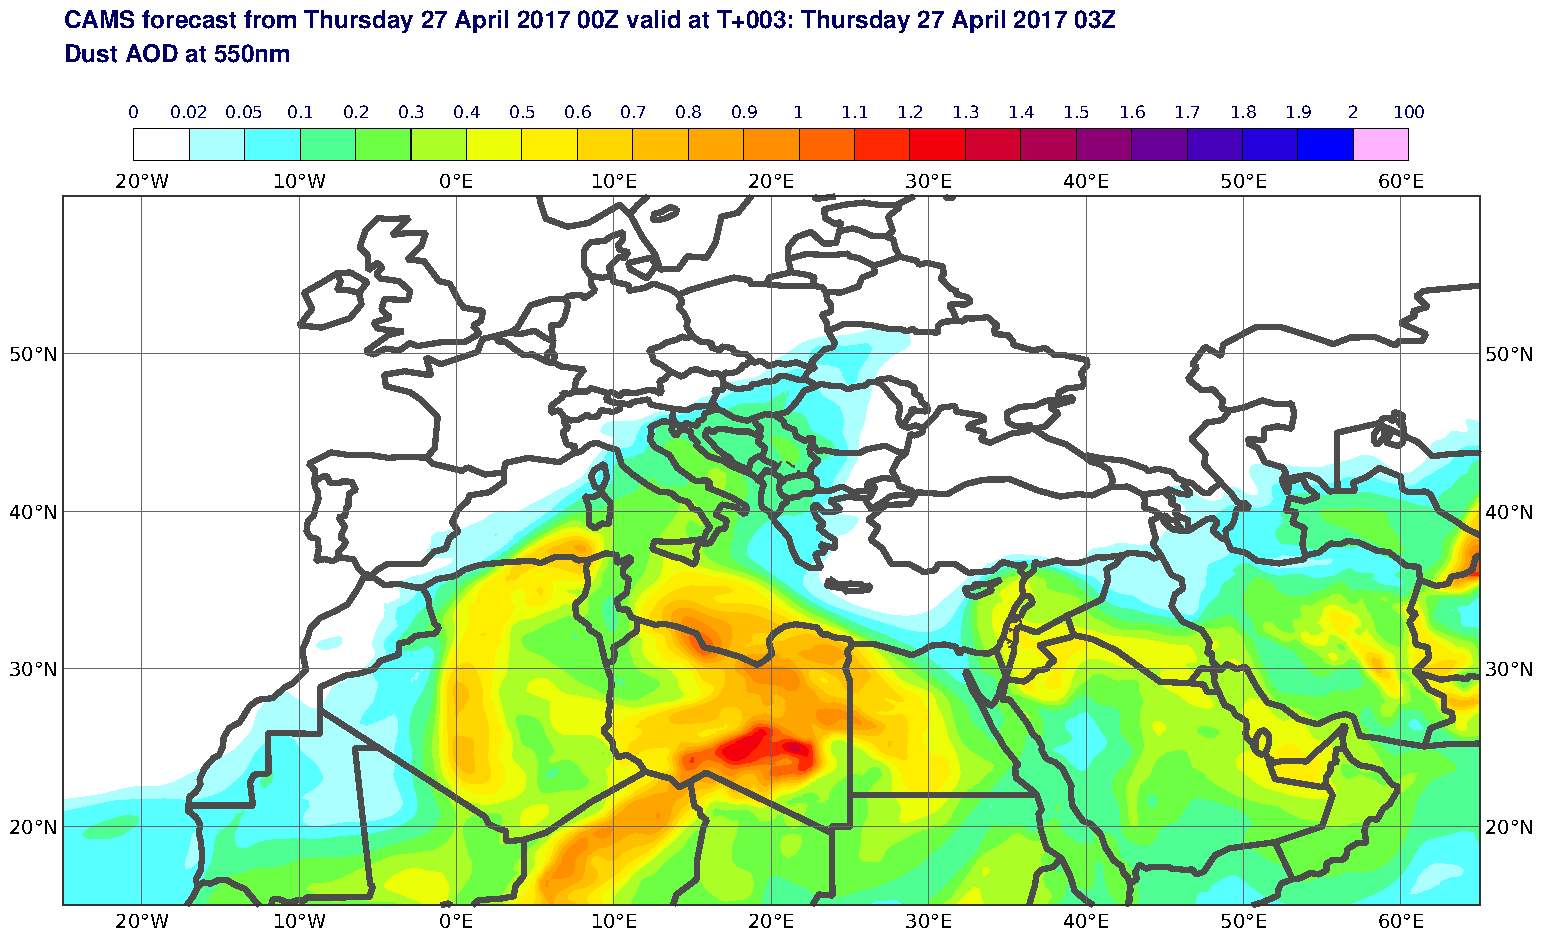 Dust AOD at 550nm valid at T3 - 2017-04-27 03:00